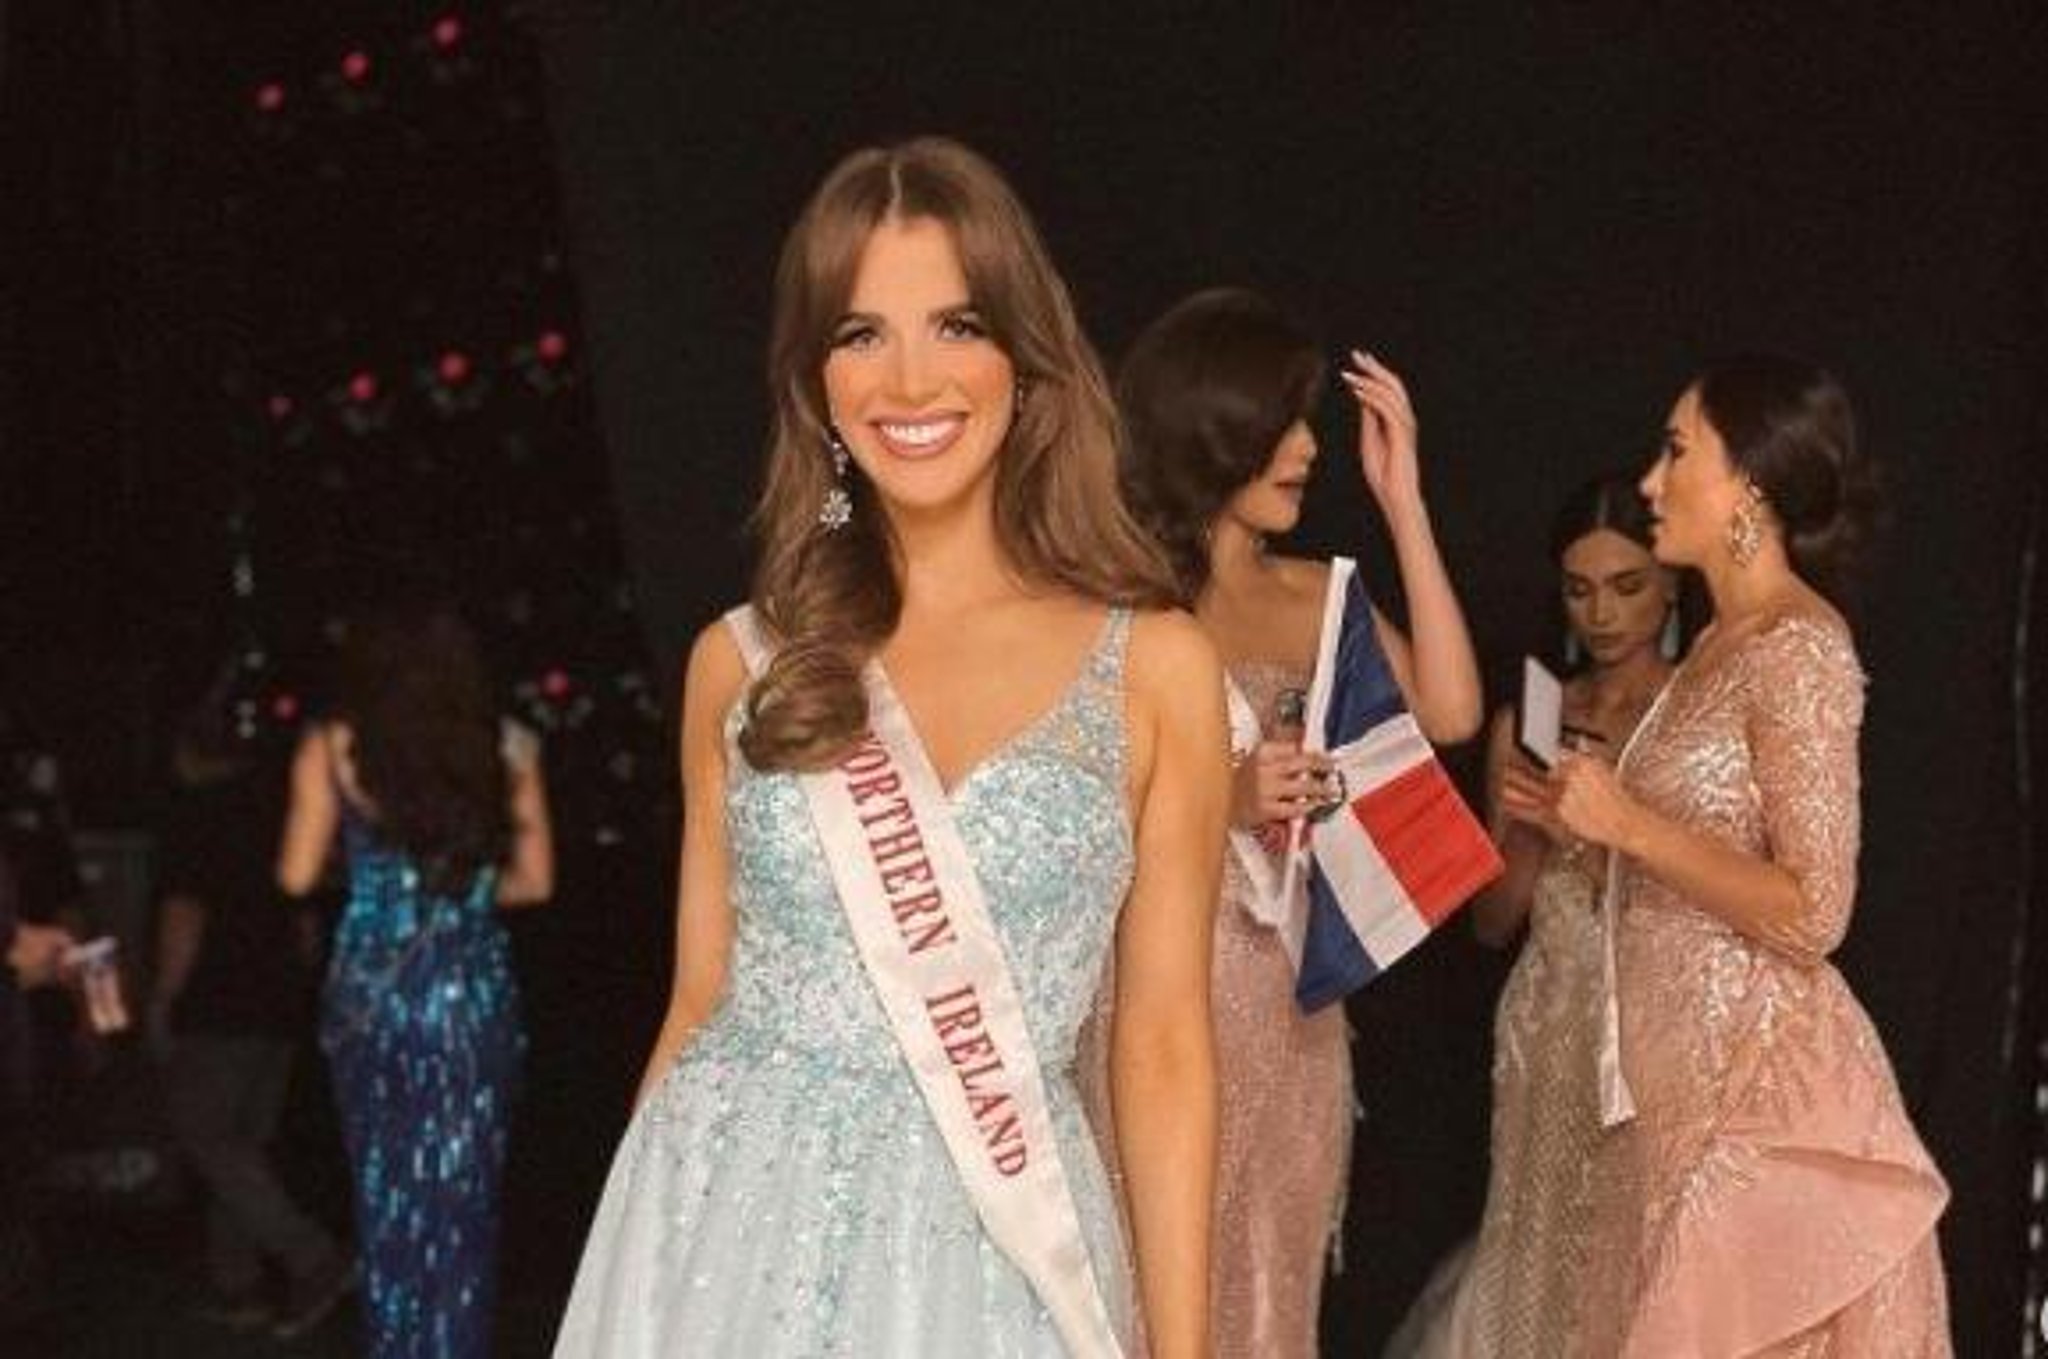 NI school teacher makes history at Miss World